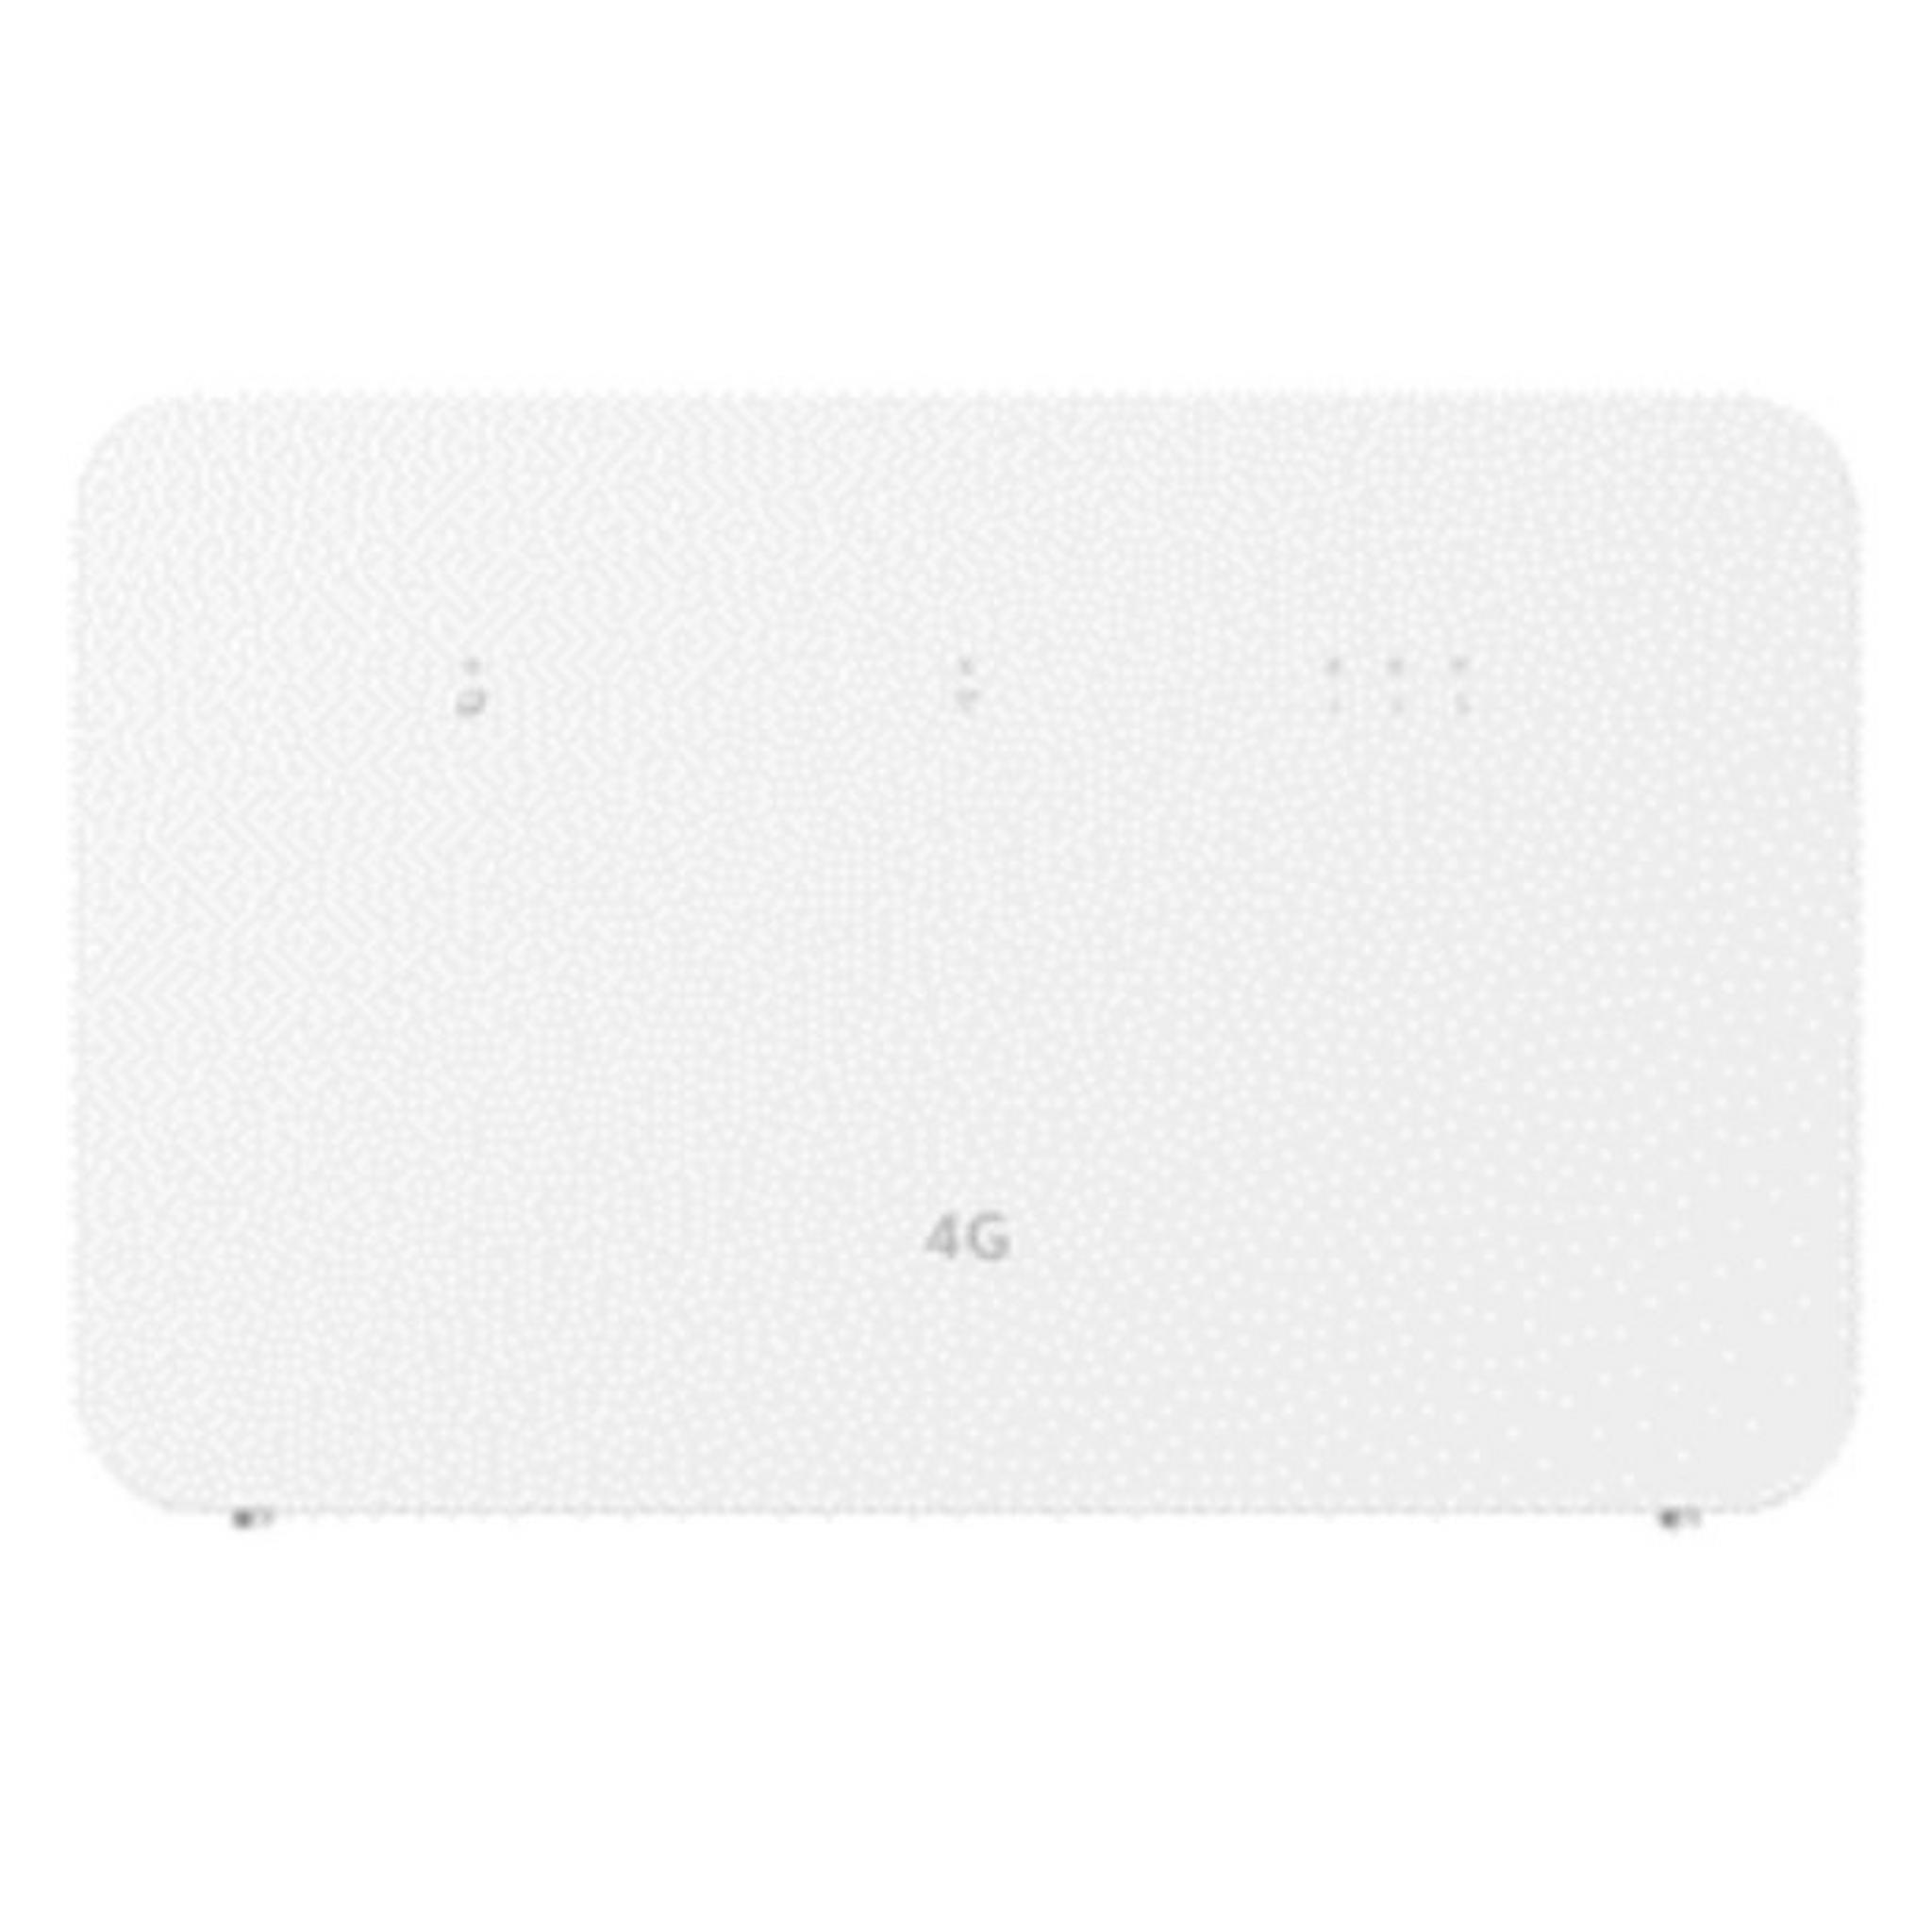 Huawei B311As 4G Router - White